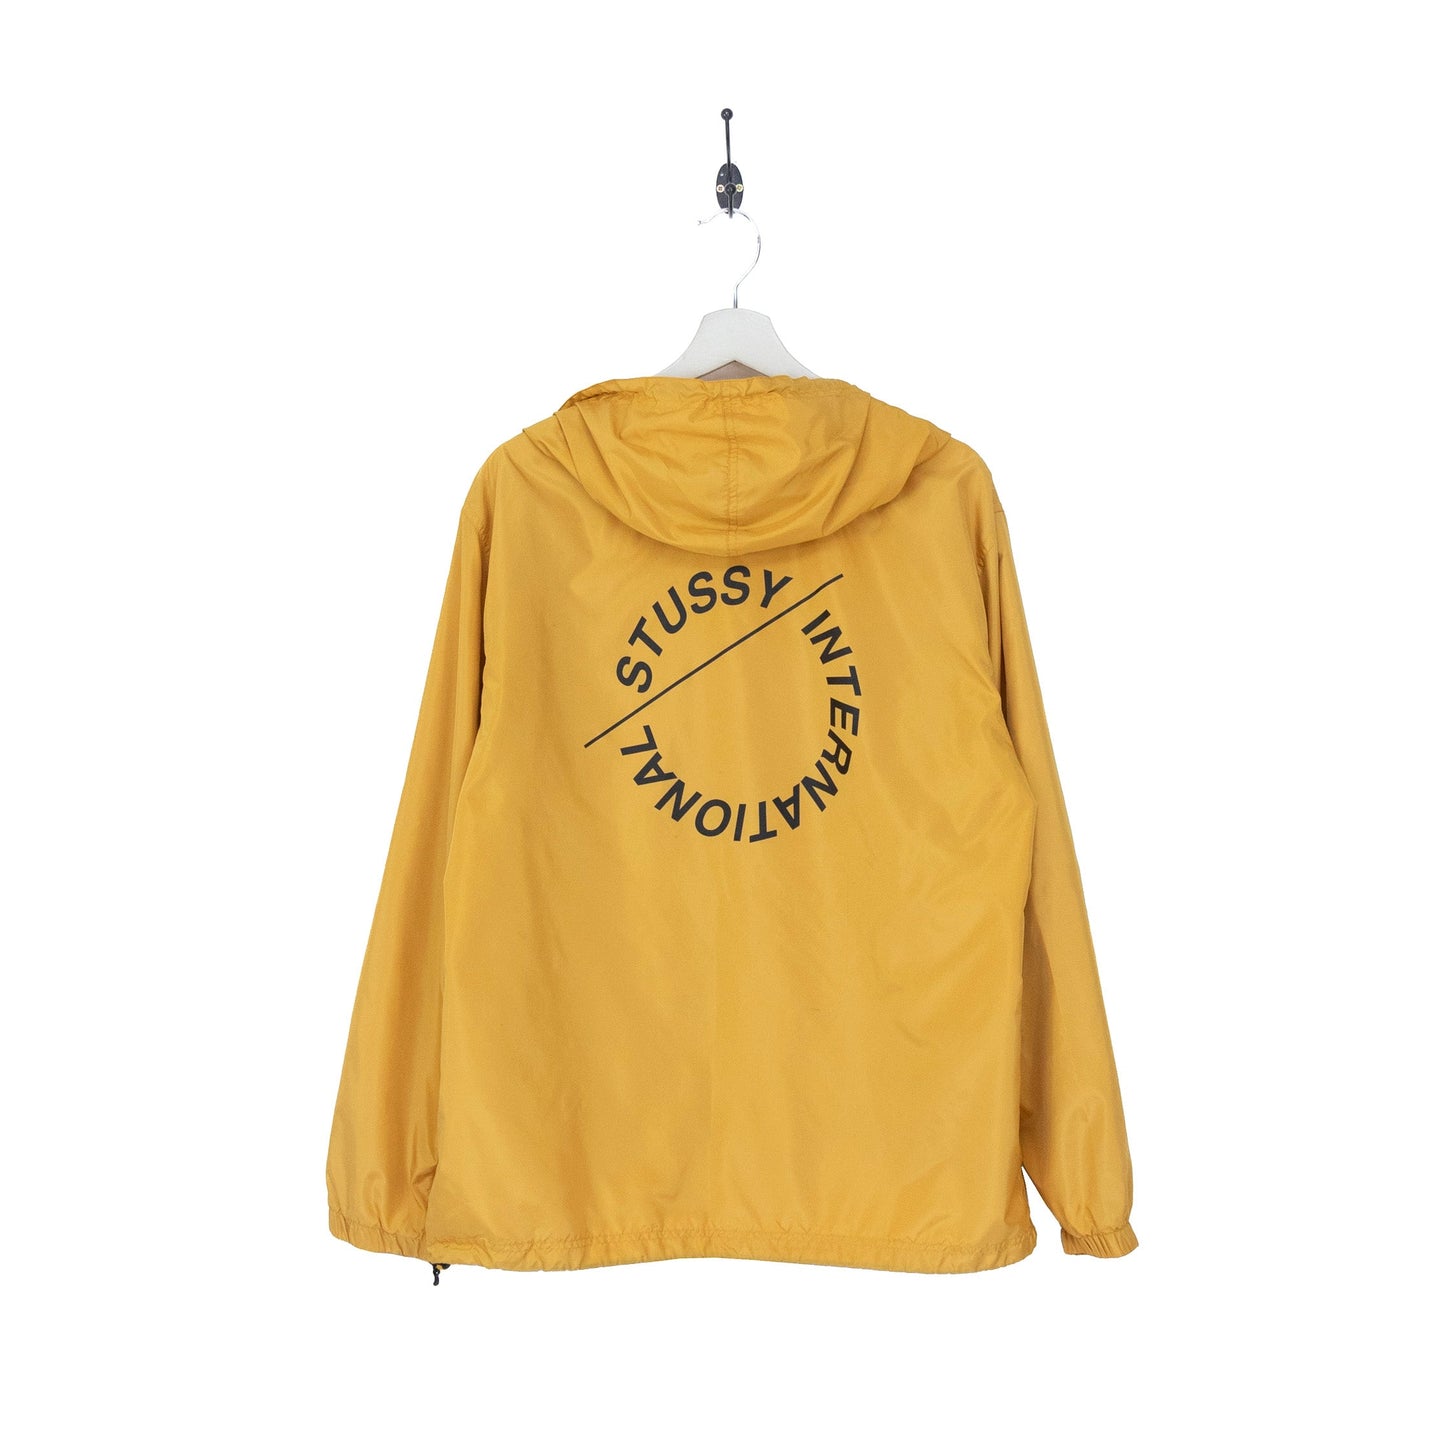 Stussy International Yellow Hooded Tech Jacket